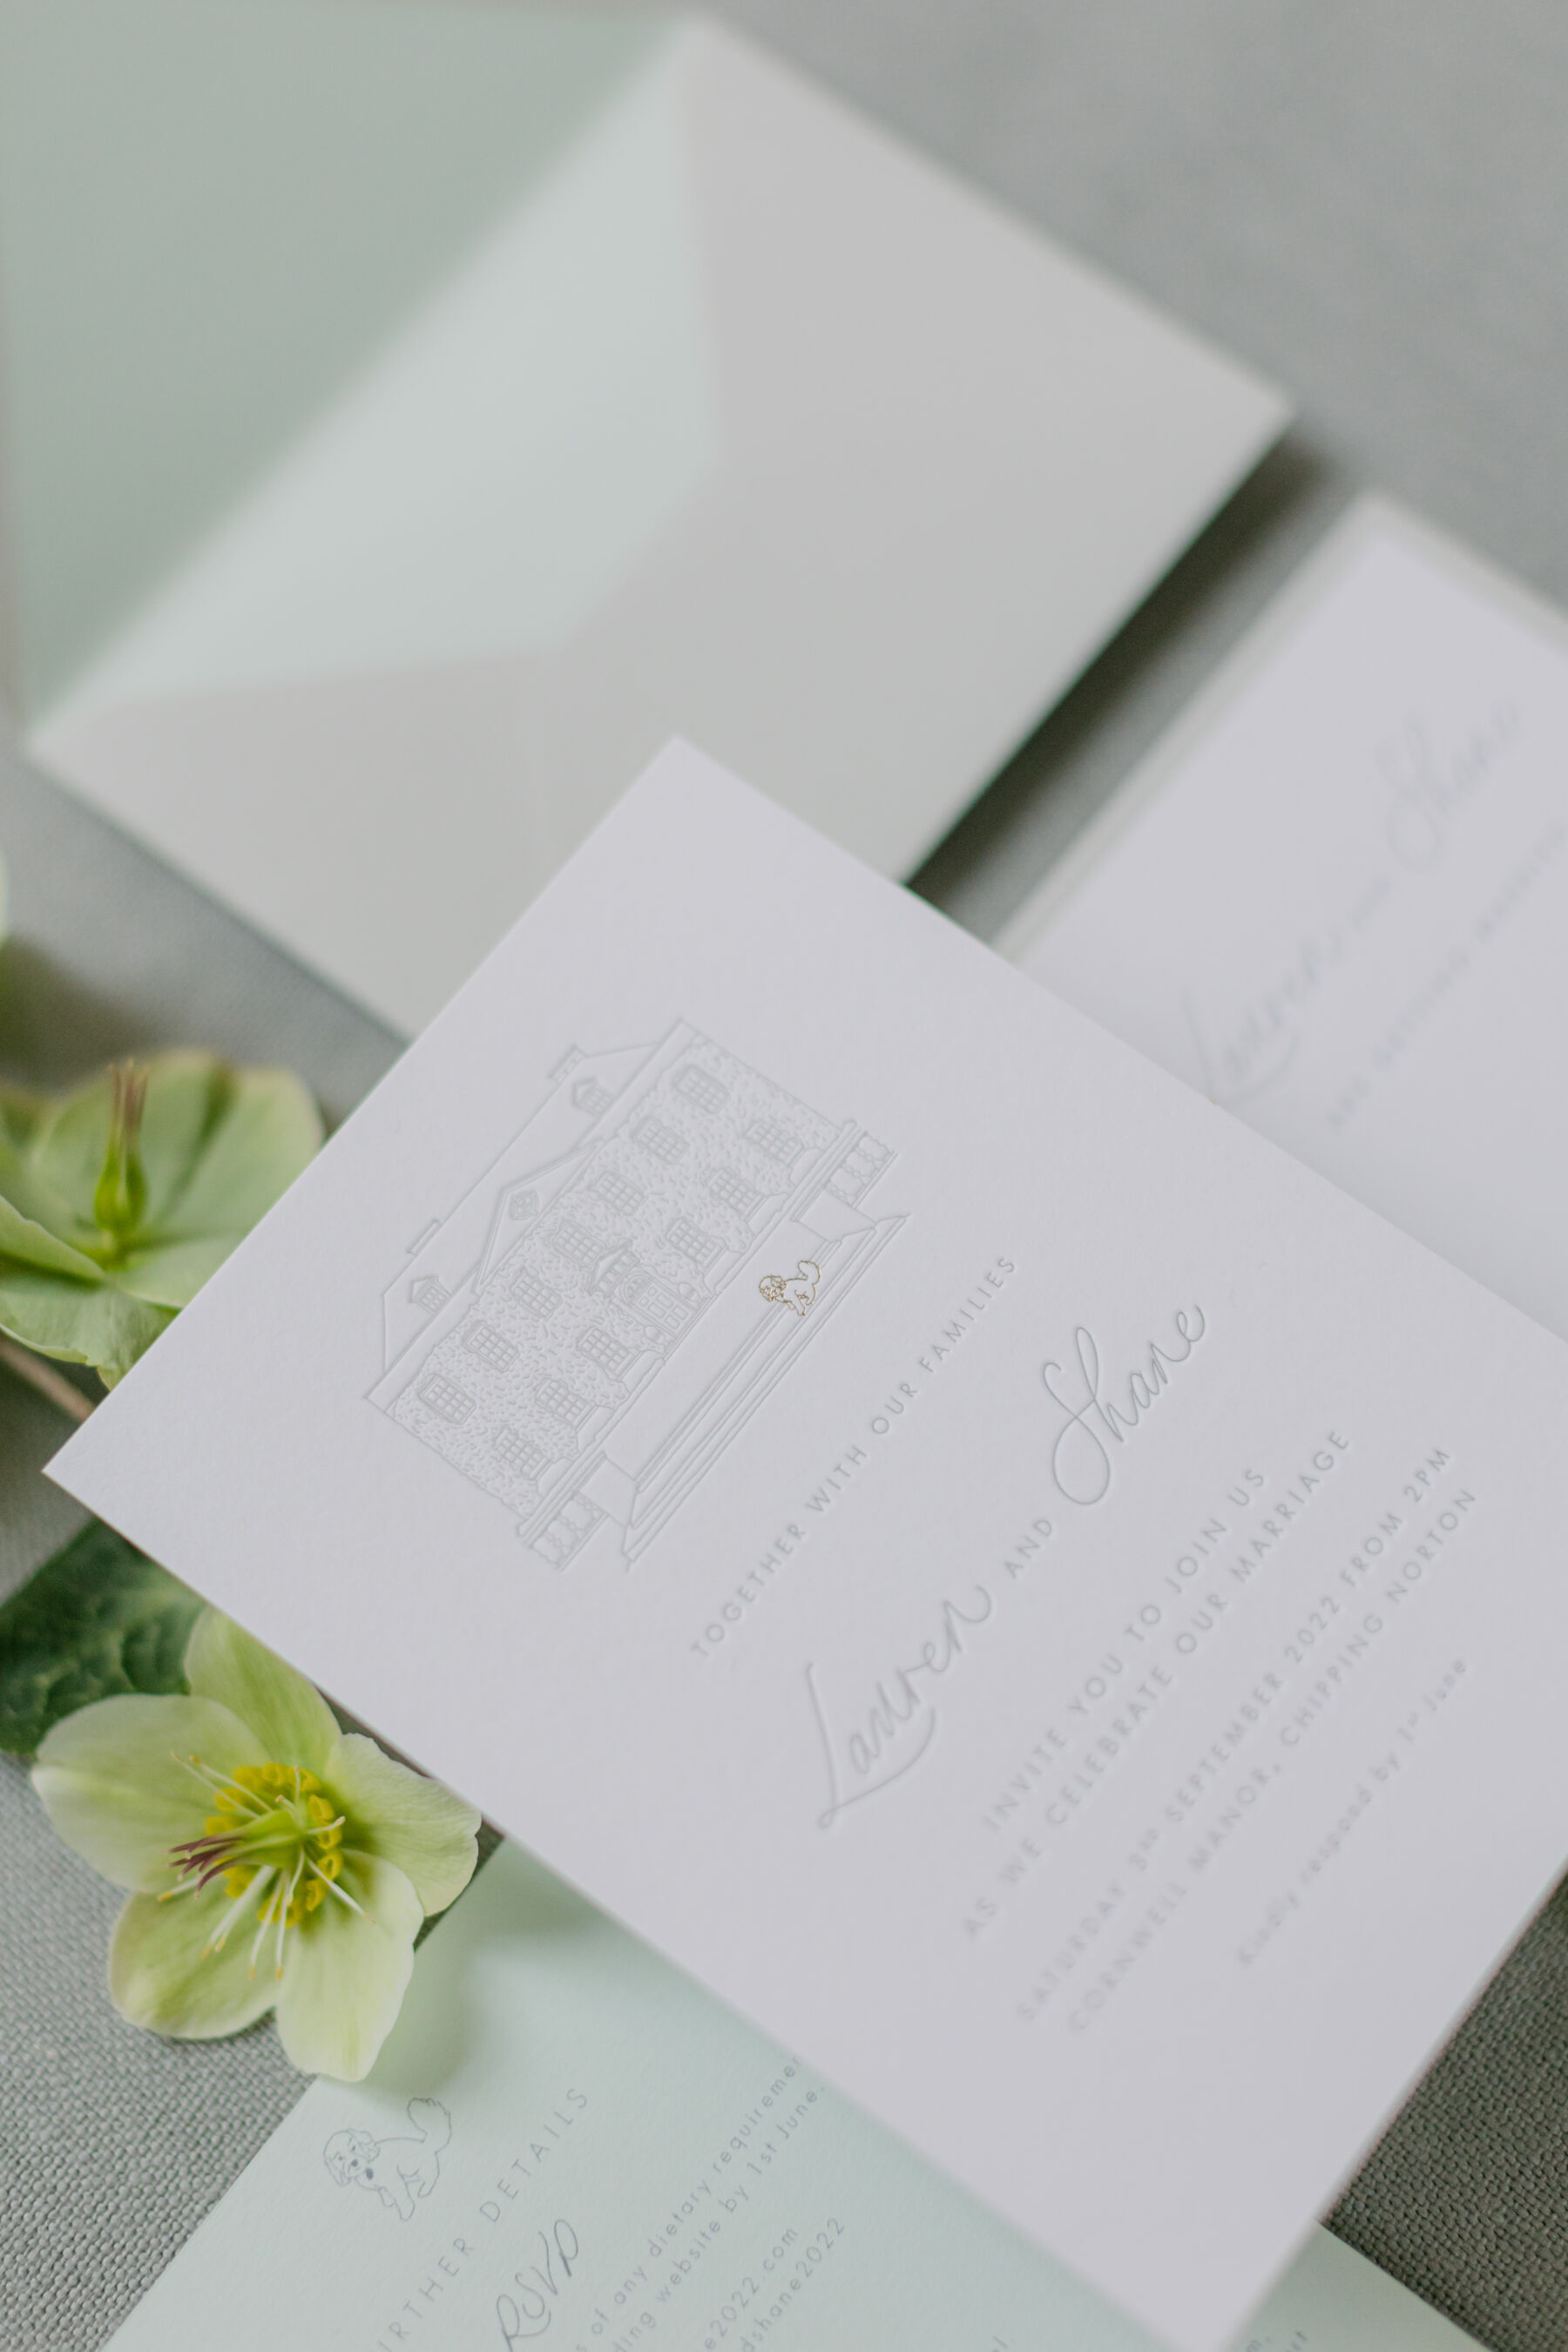 Bespoke letterpress printed wedding invitation suite with a venue illustration and pet illustration.